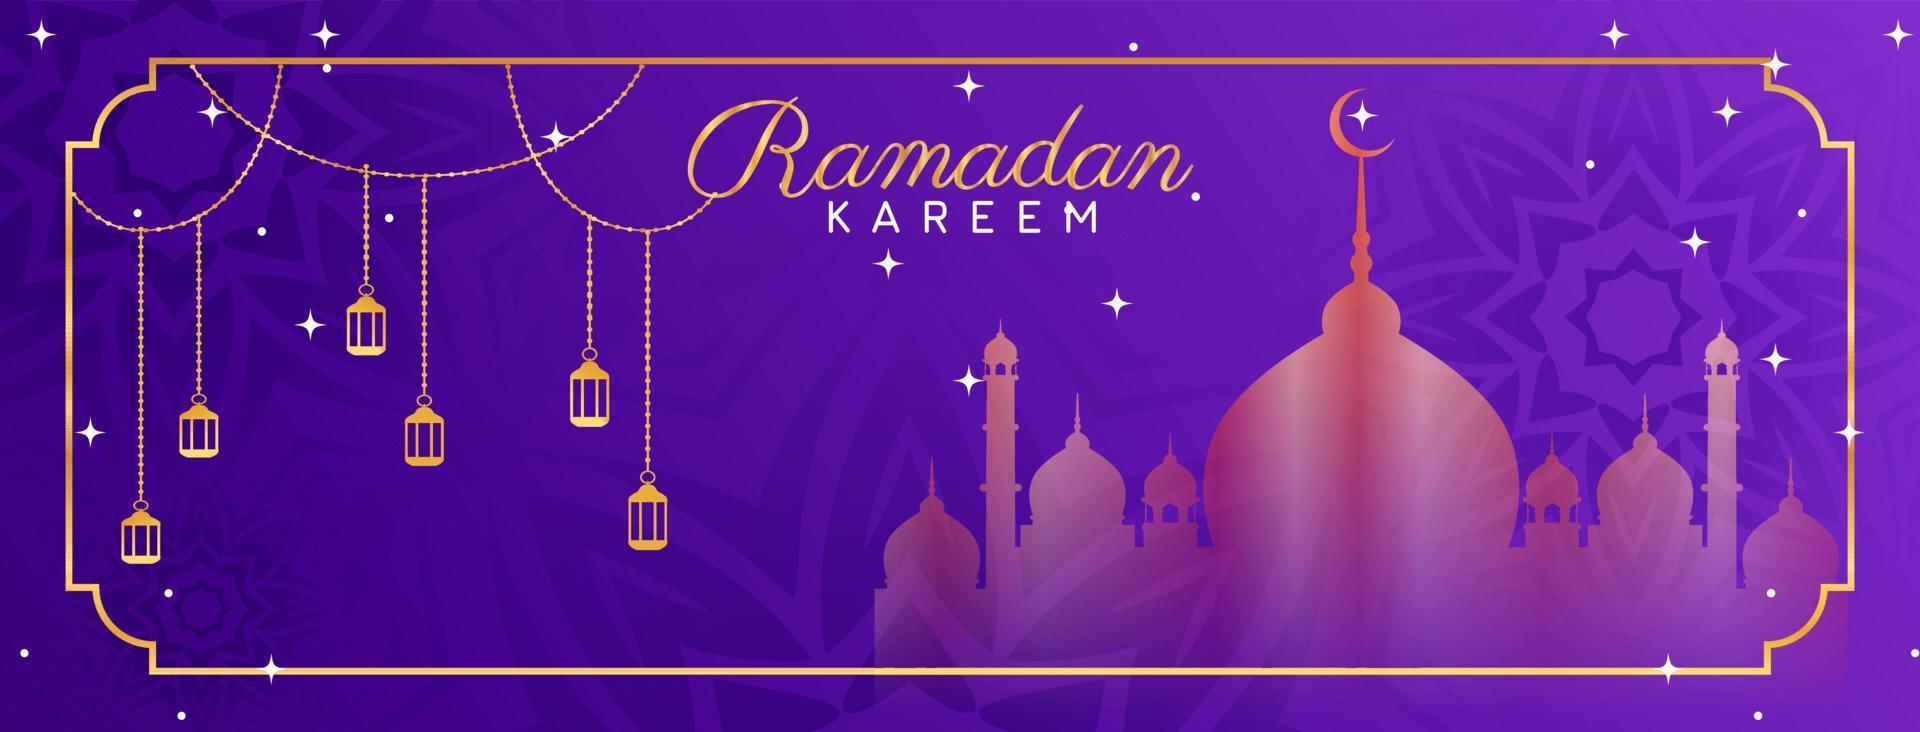 Happy Islamic Ramadan Eid Mubarak cover page template. vector